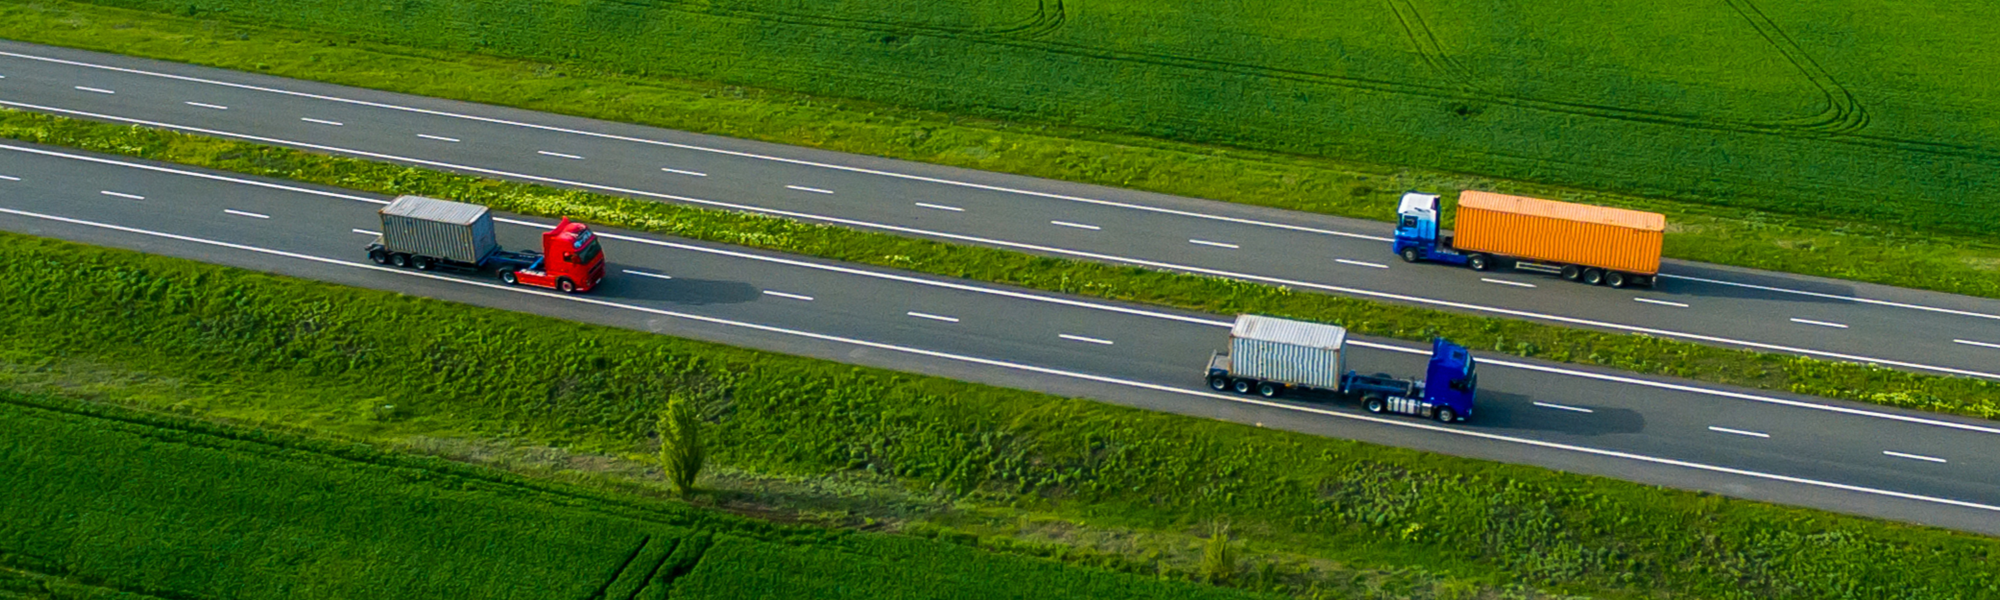 Alternative fuels infrastructure deal inches EU road greening forward